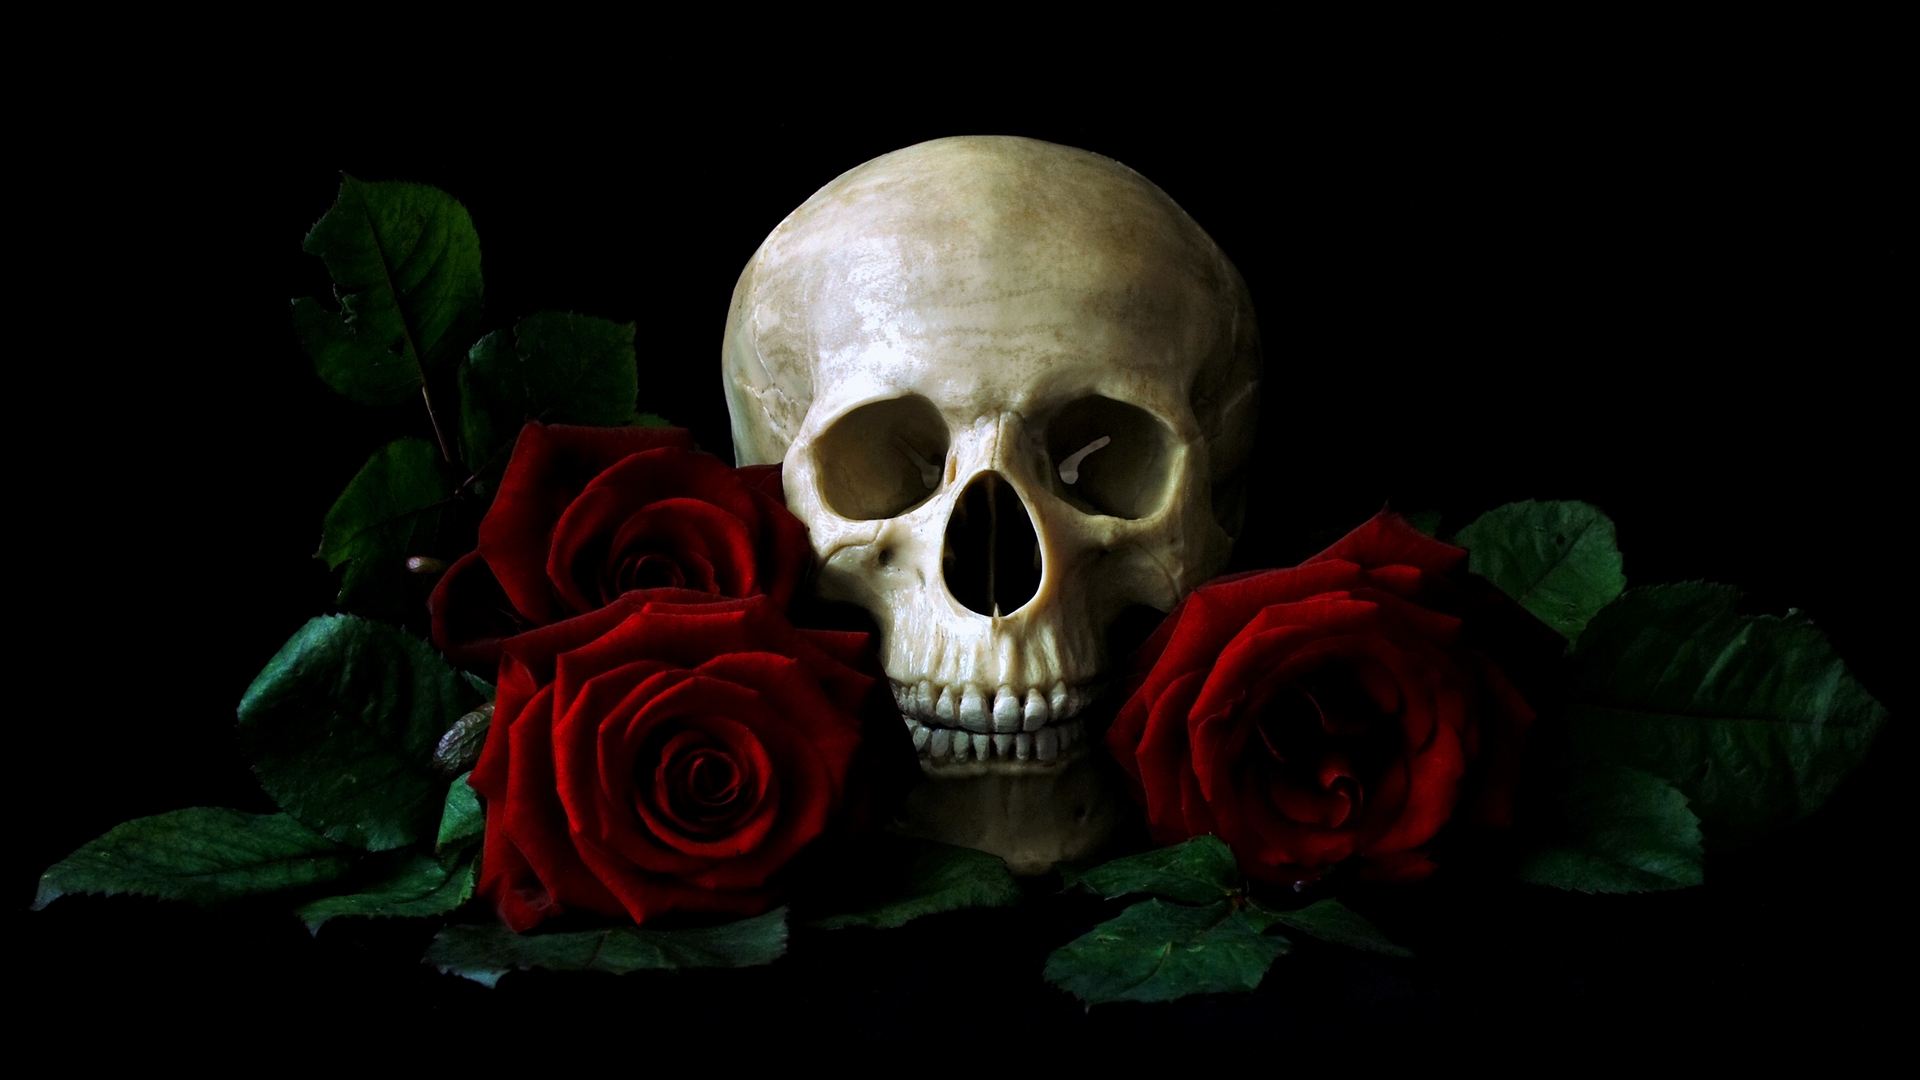 Love skull and roses wallpaper